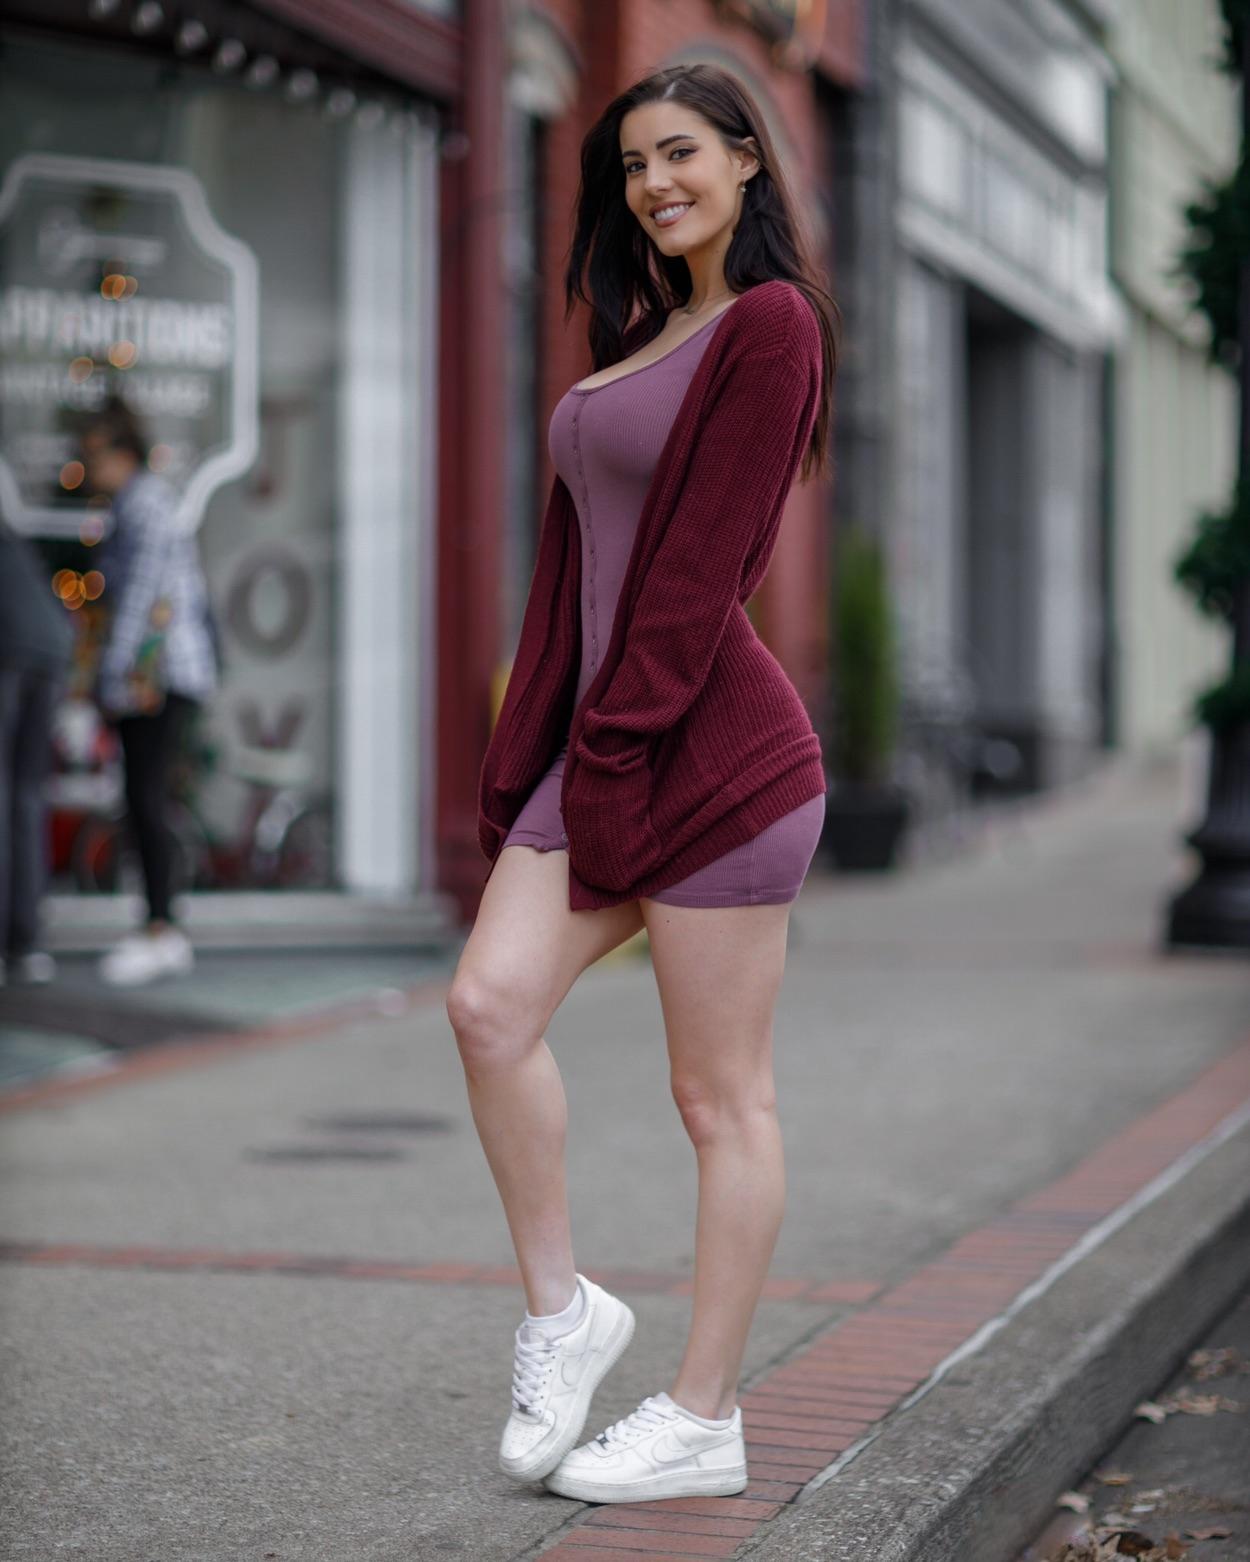 Erin Olash Sexy Tight Dress Photoshoot Leaked 115